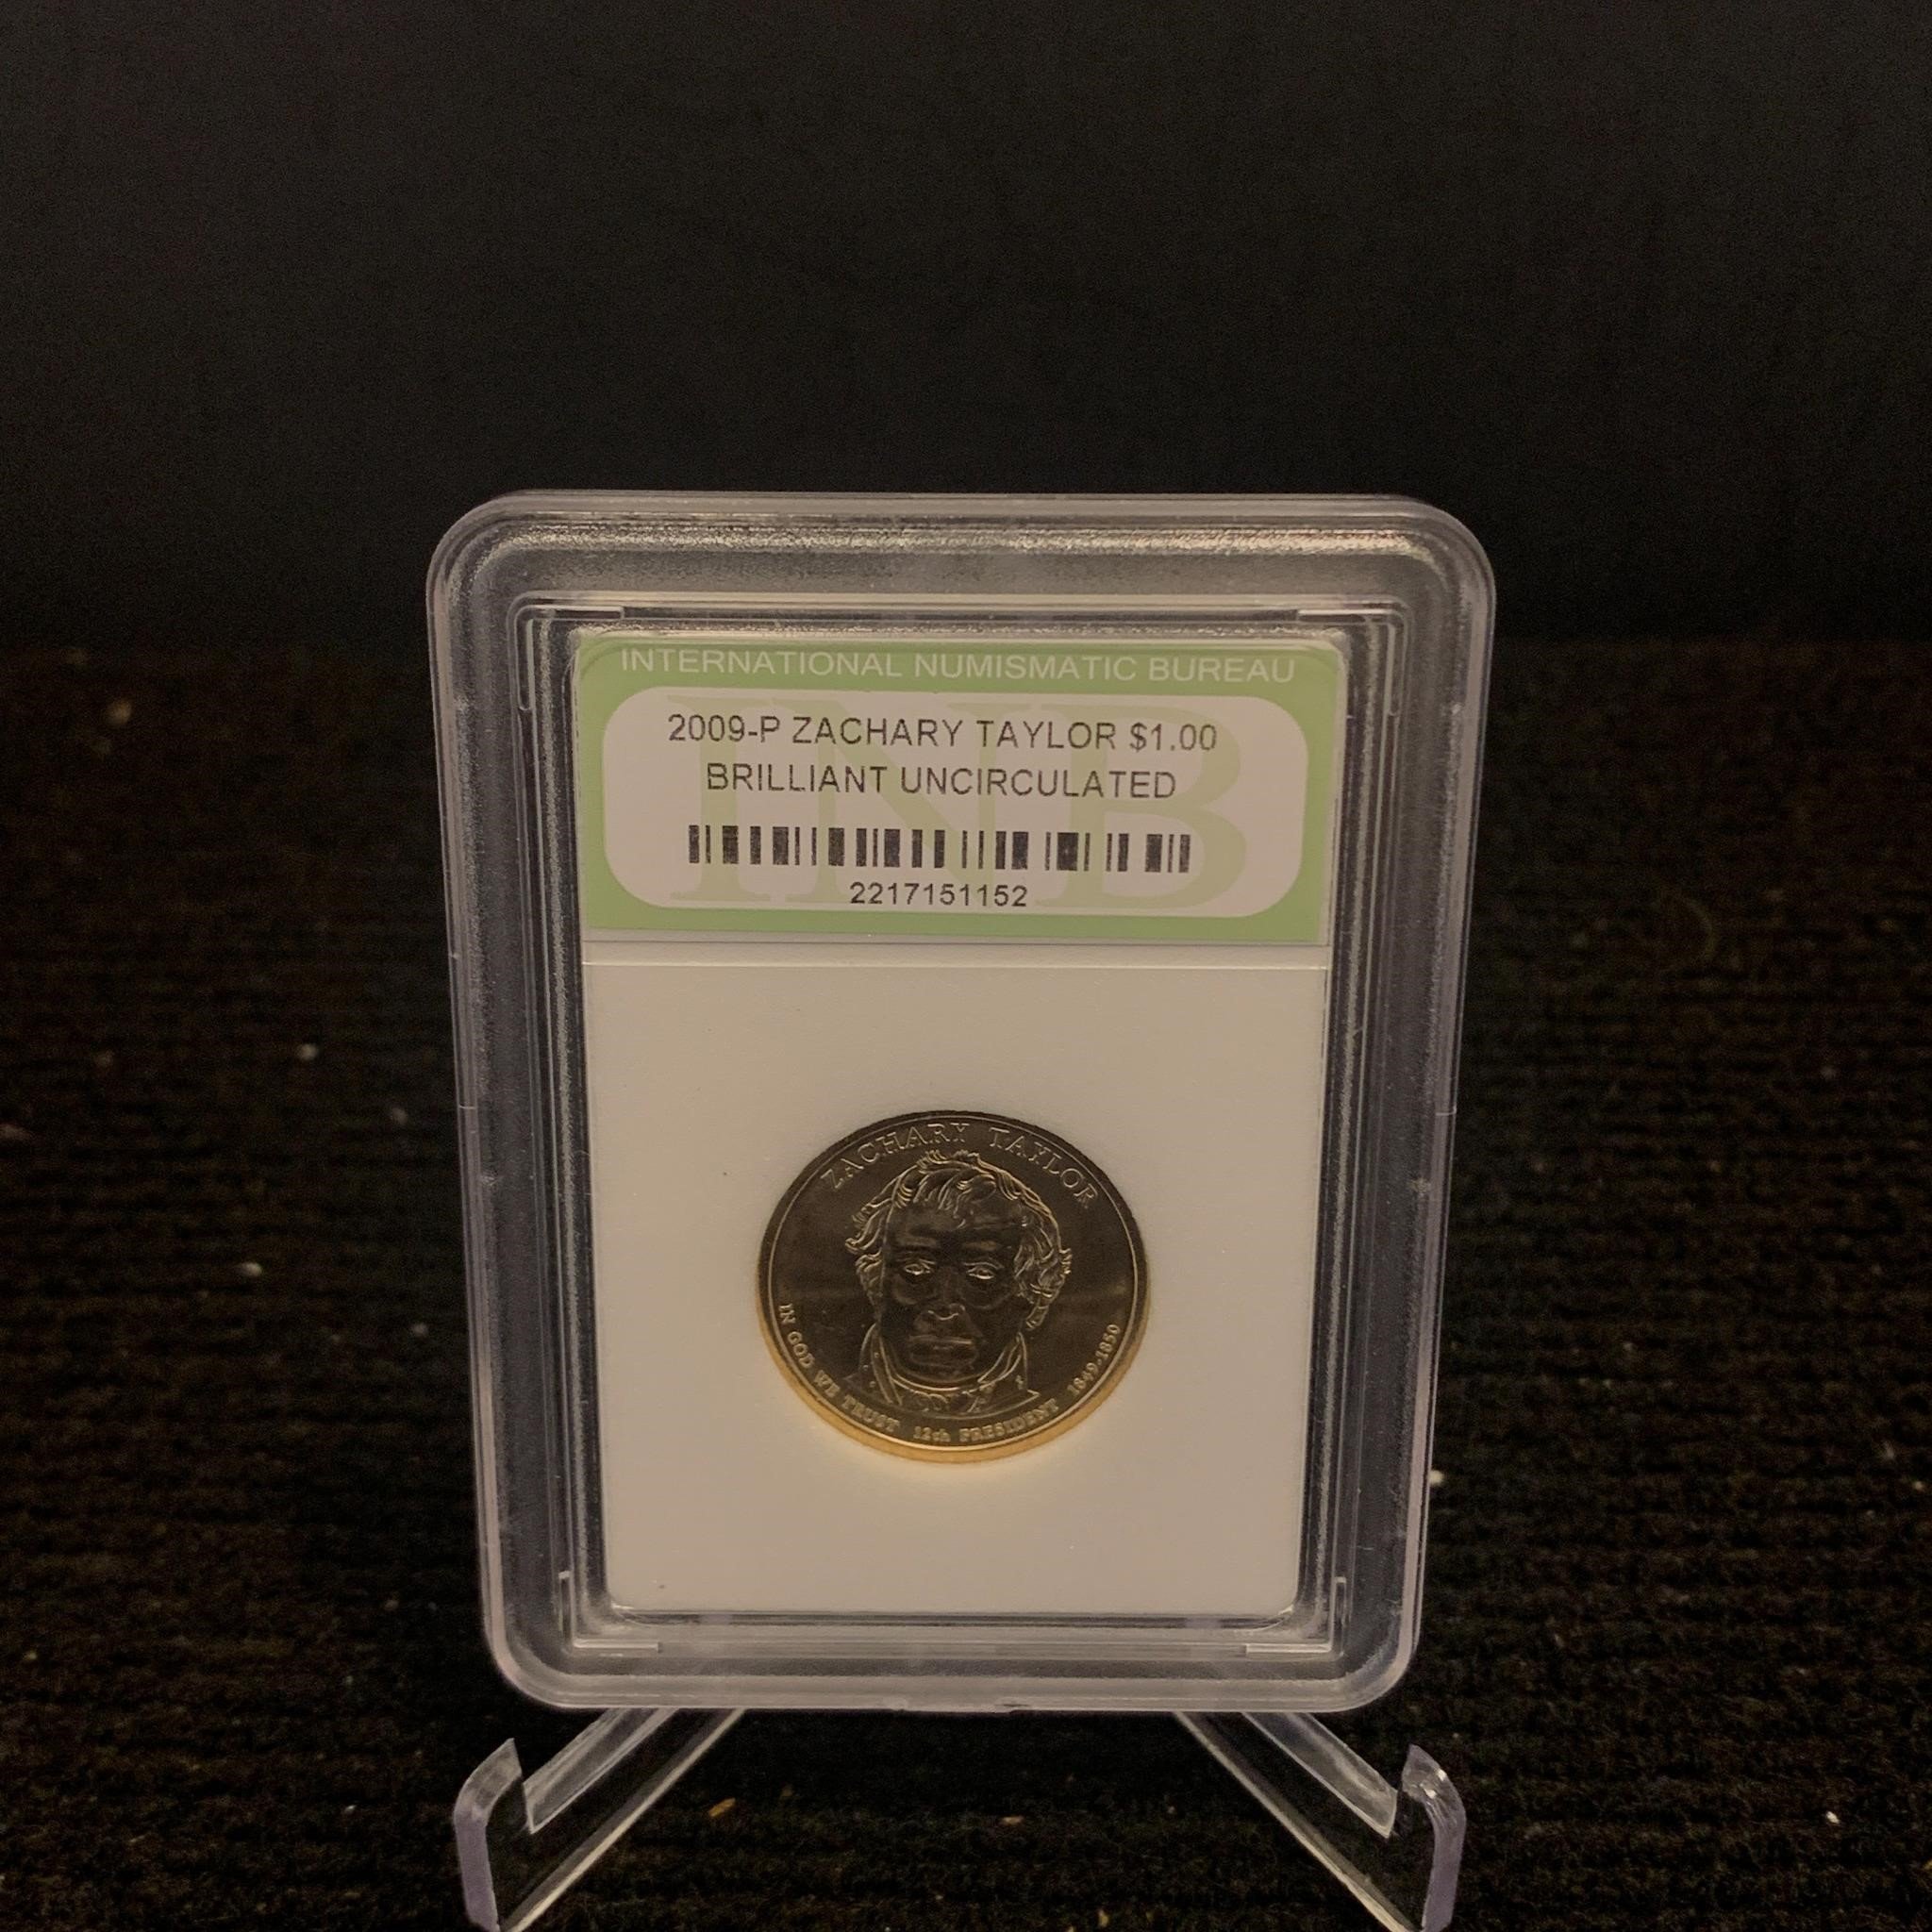 2009-P Zachary Taylor $1 Coin